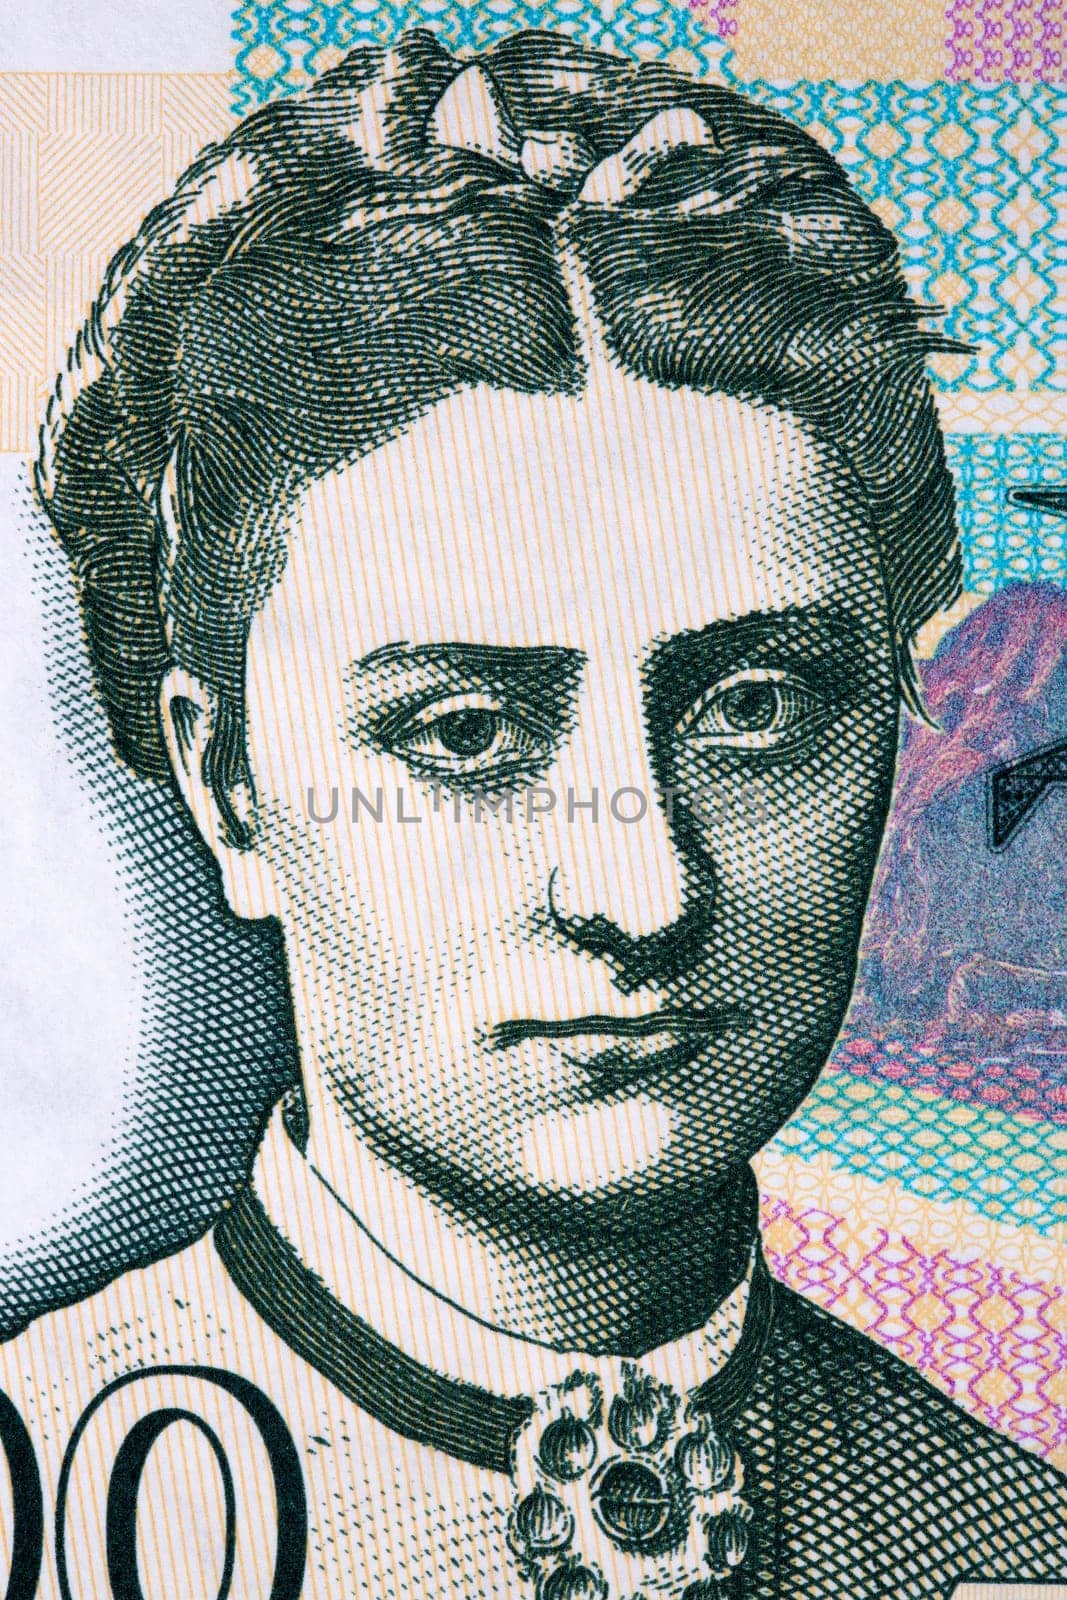 Gina Krog a portrait from money by johan10